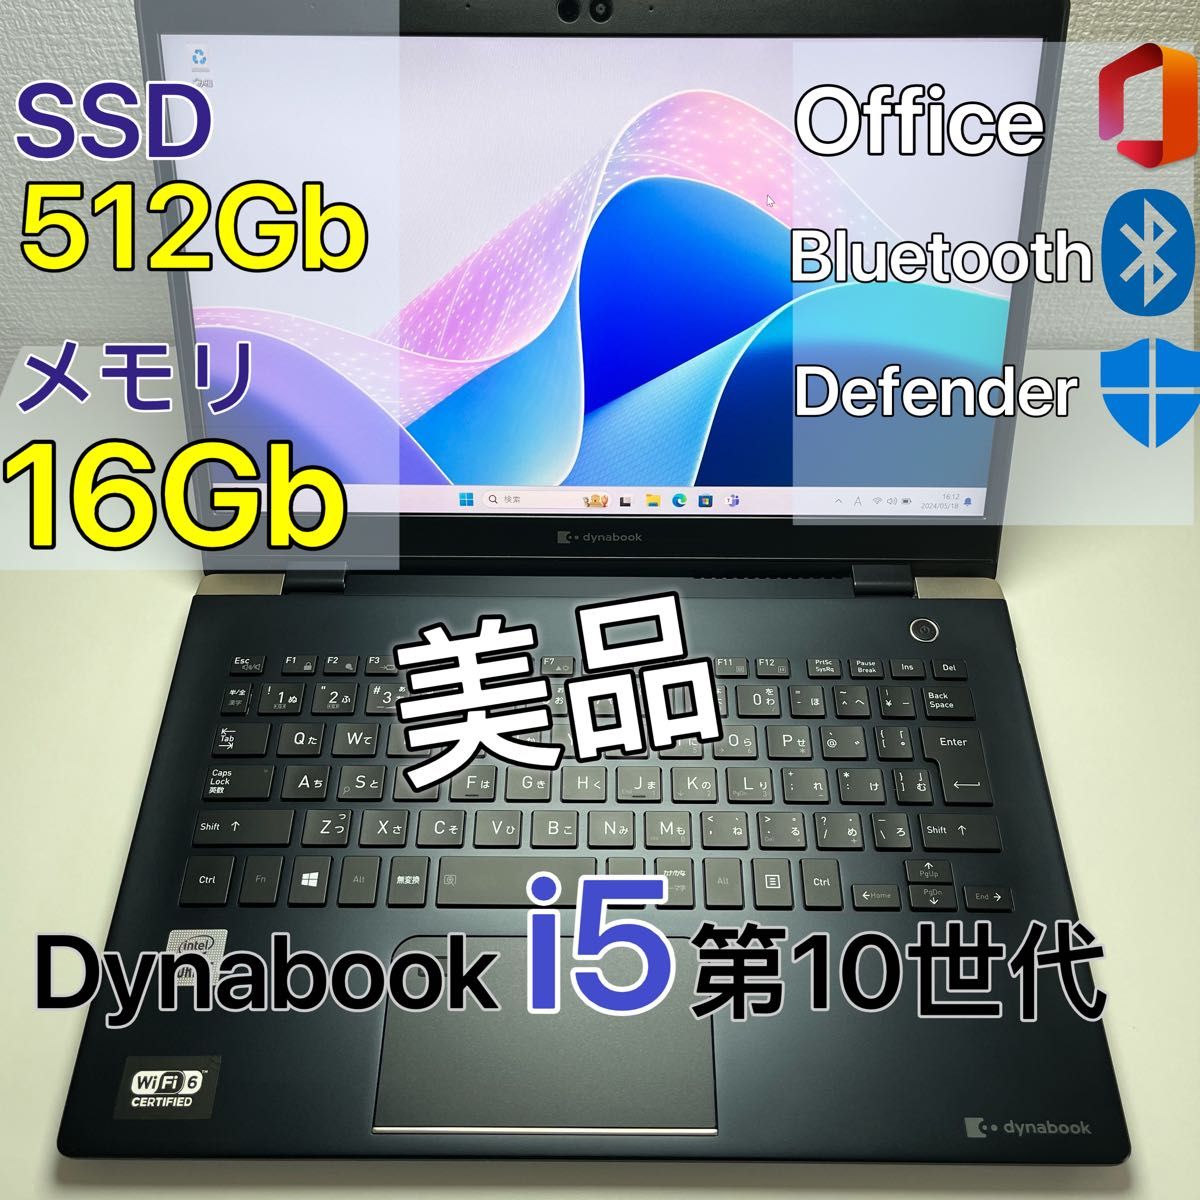 Toshiba dynabook G83/FS i5第10世代 16Gb 超軽量ノートPC 